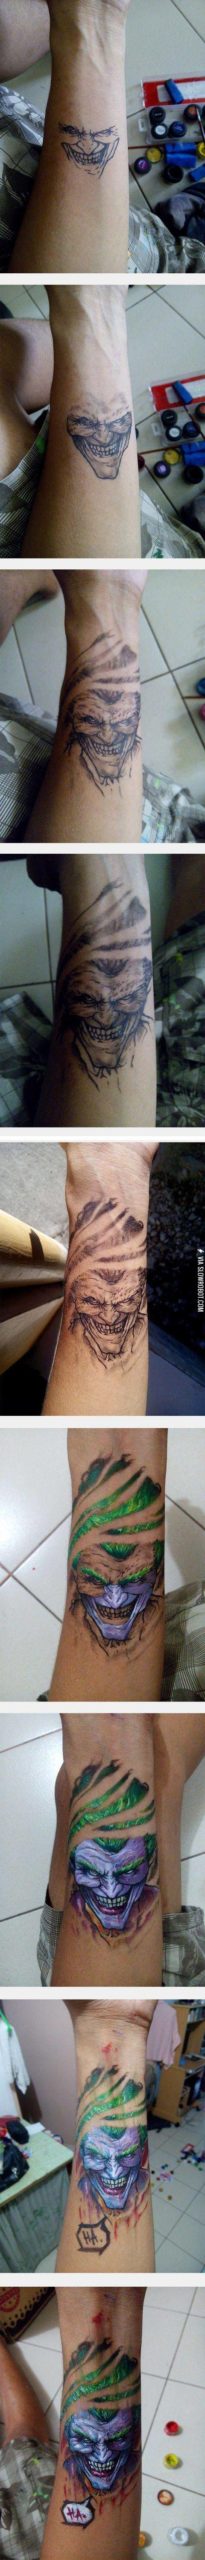 Impressive+Joker+tattoo